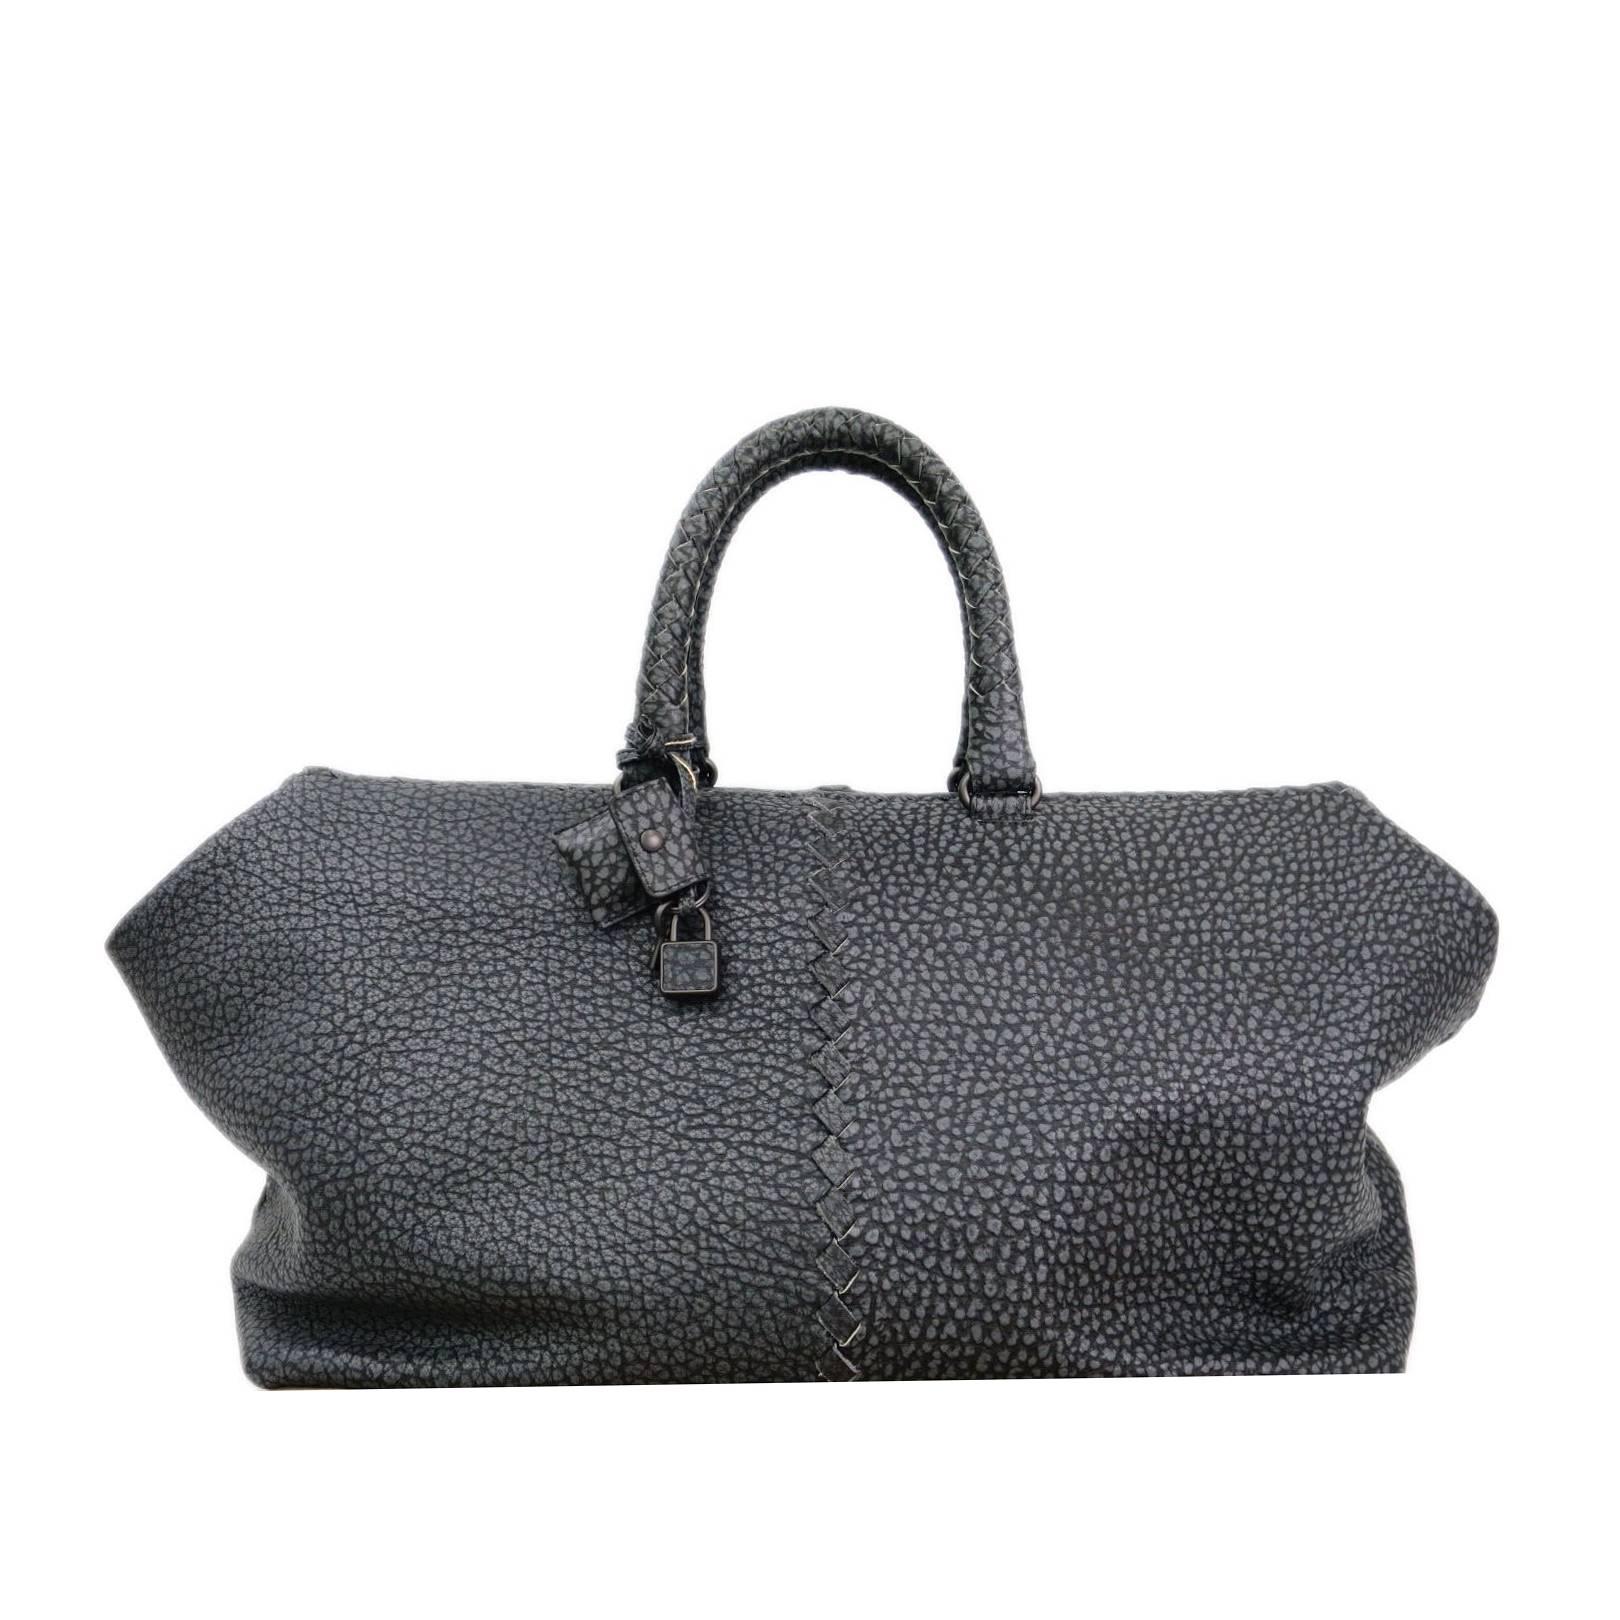 Bottega Veneta Black Textured Leather Overnight Weekend Duffle Bag